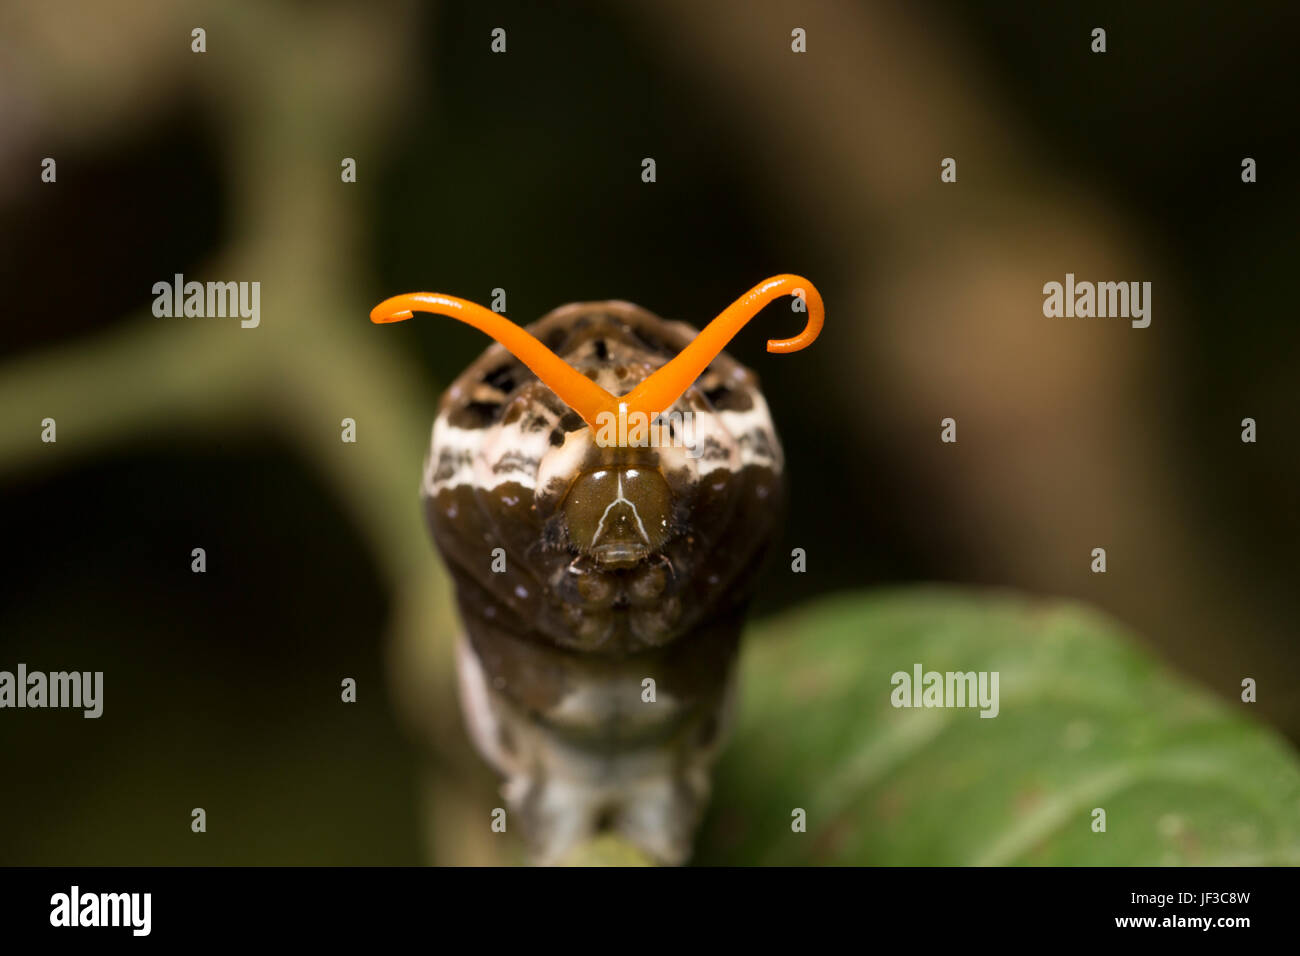 King, especie Papilio thoas, Caterpillar o larva, extendiendo su osmaterium para imitar una lengüeta bifurcada de la serpiente. La Selva, Costa Rica Foto de stock